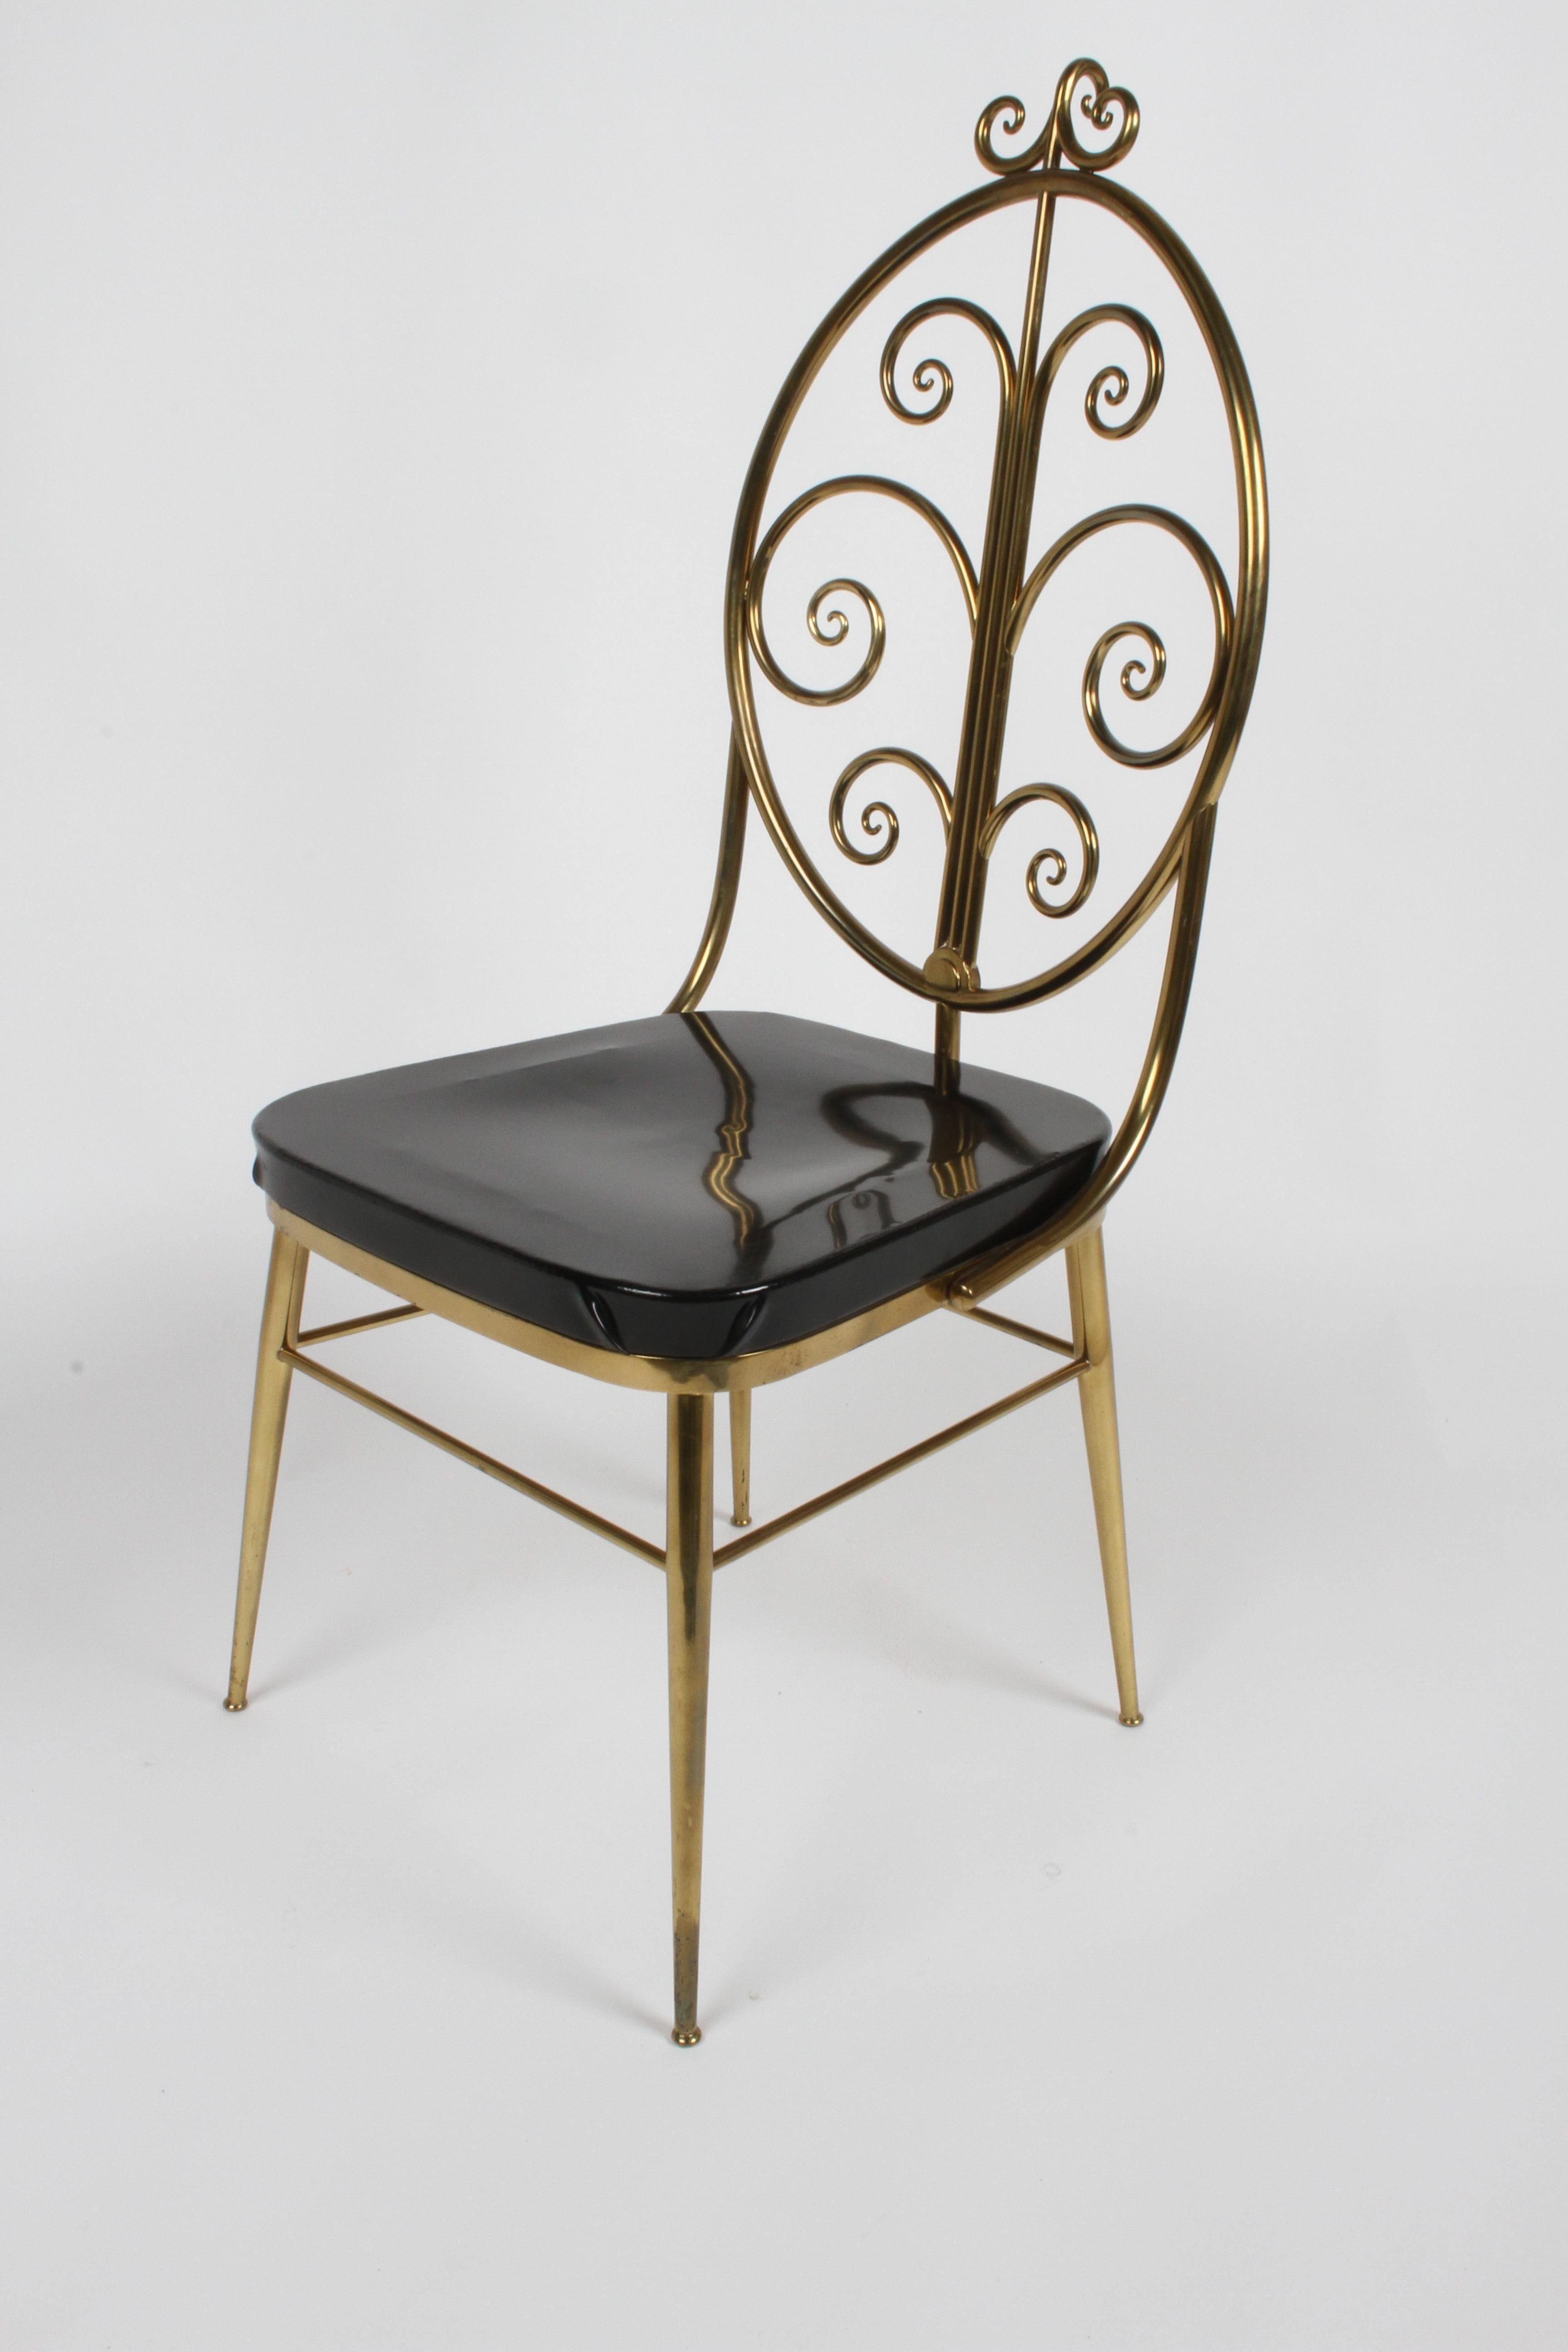 European Italian Mid-Century Modern High Style Brass Scroll Desk or Side Chair Black Seat For Sale